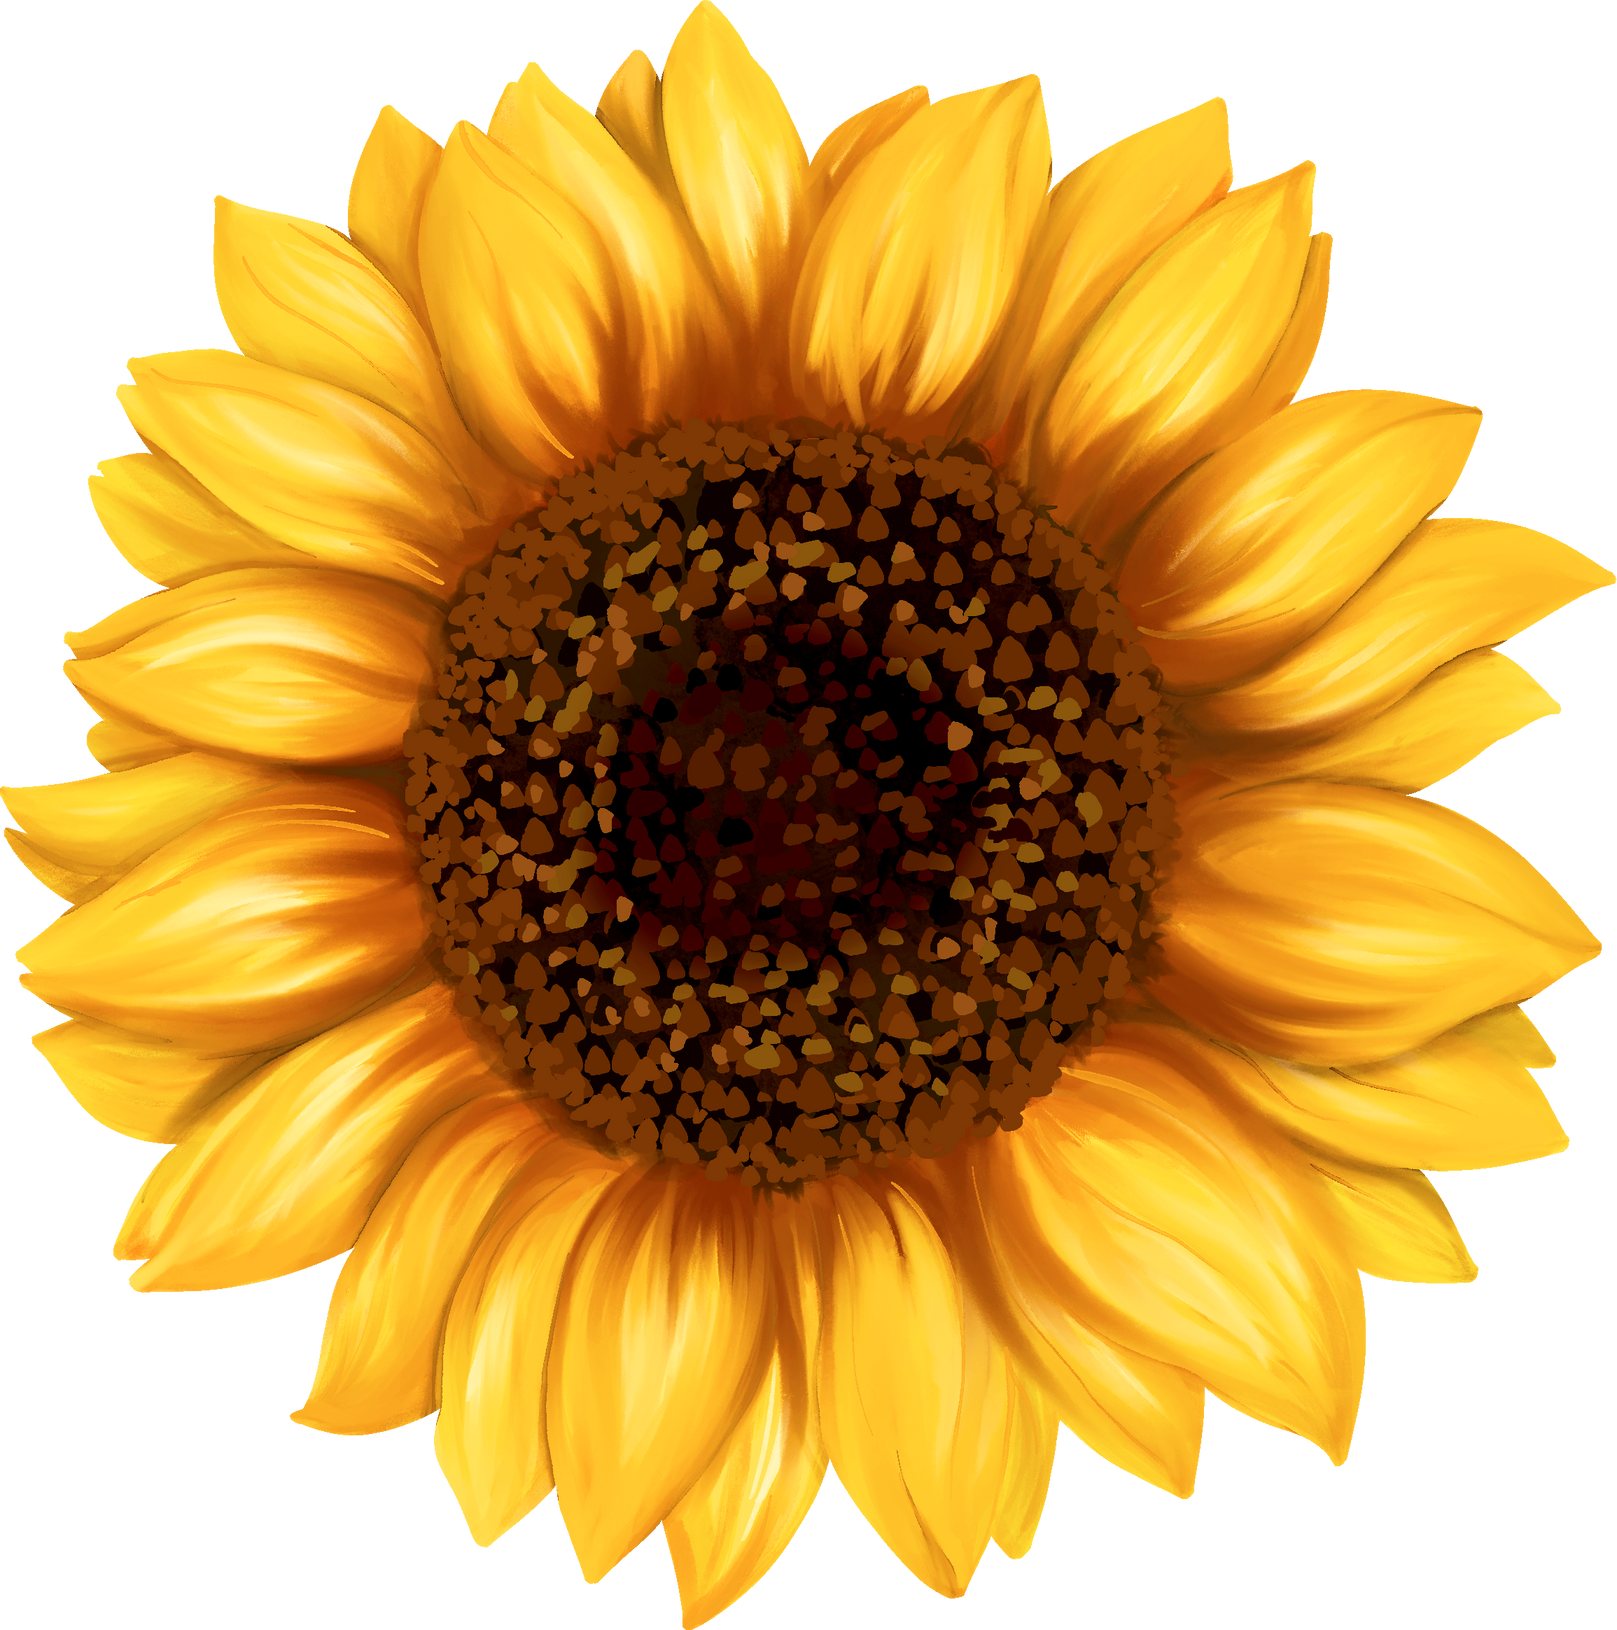 Watercolor Sunflower Illustration